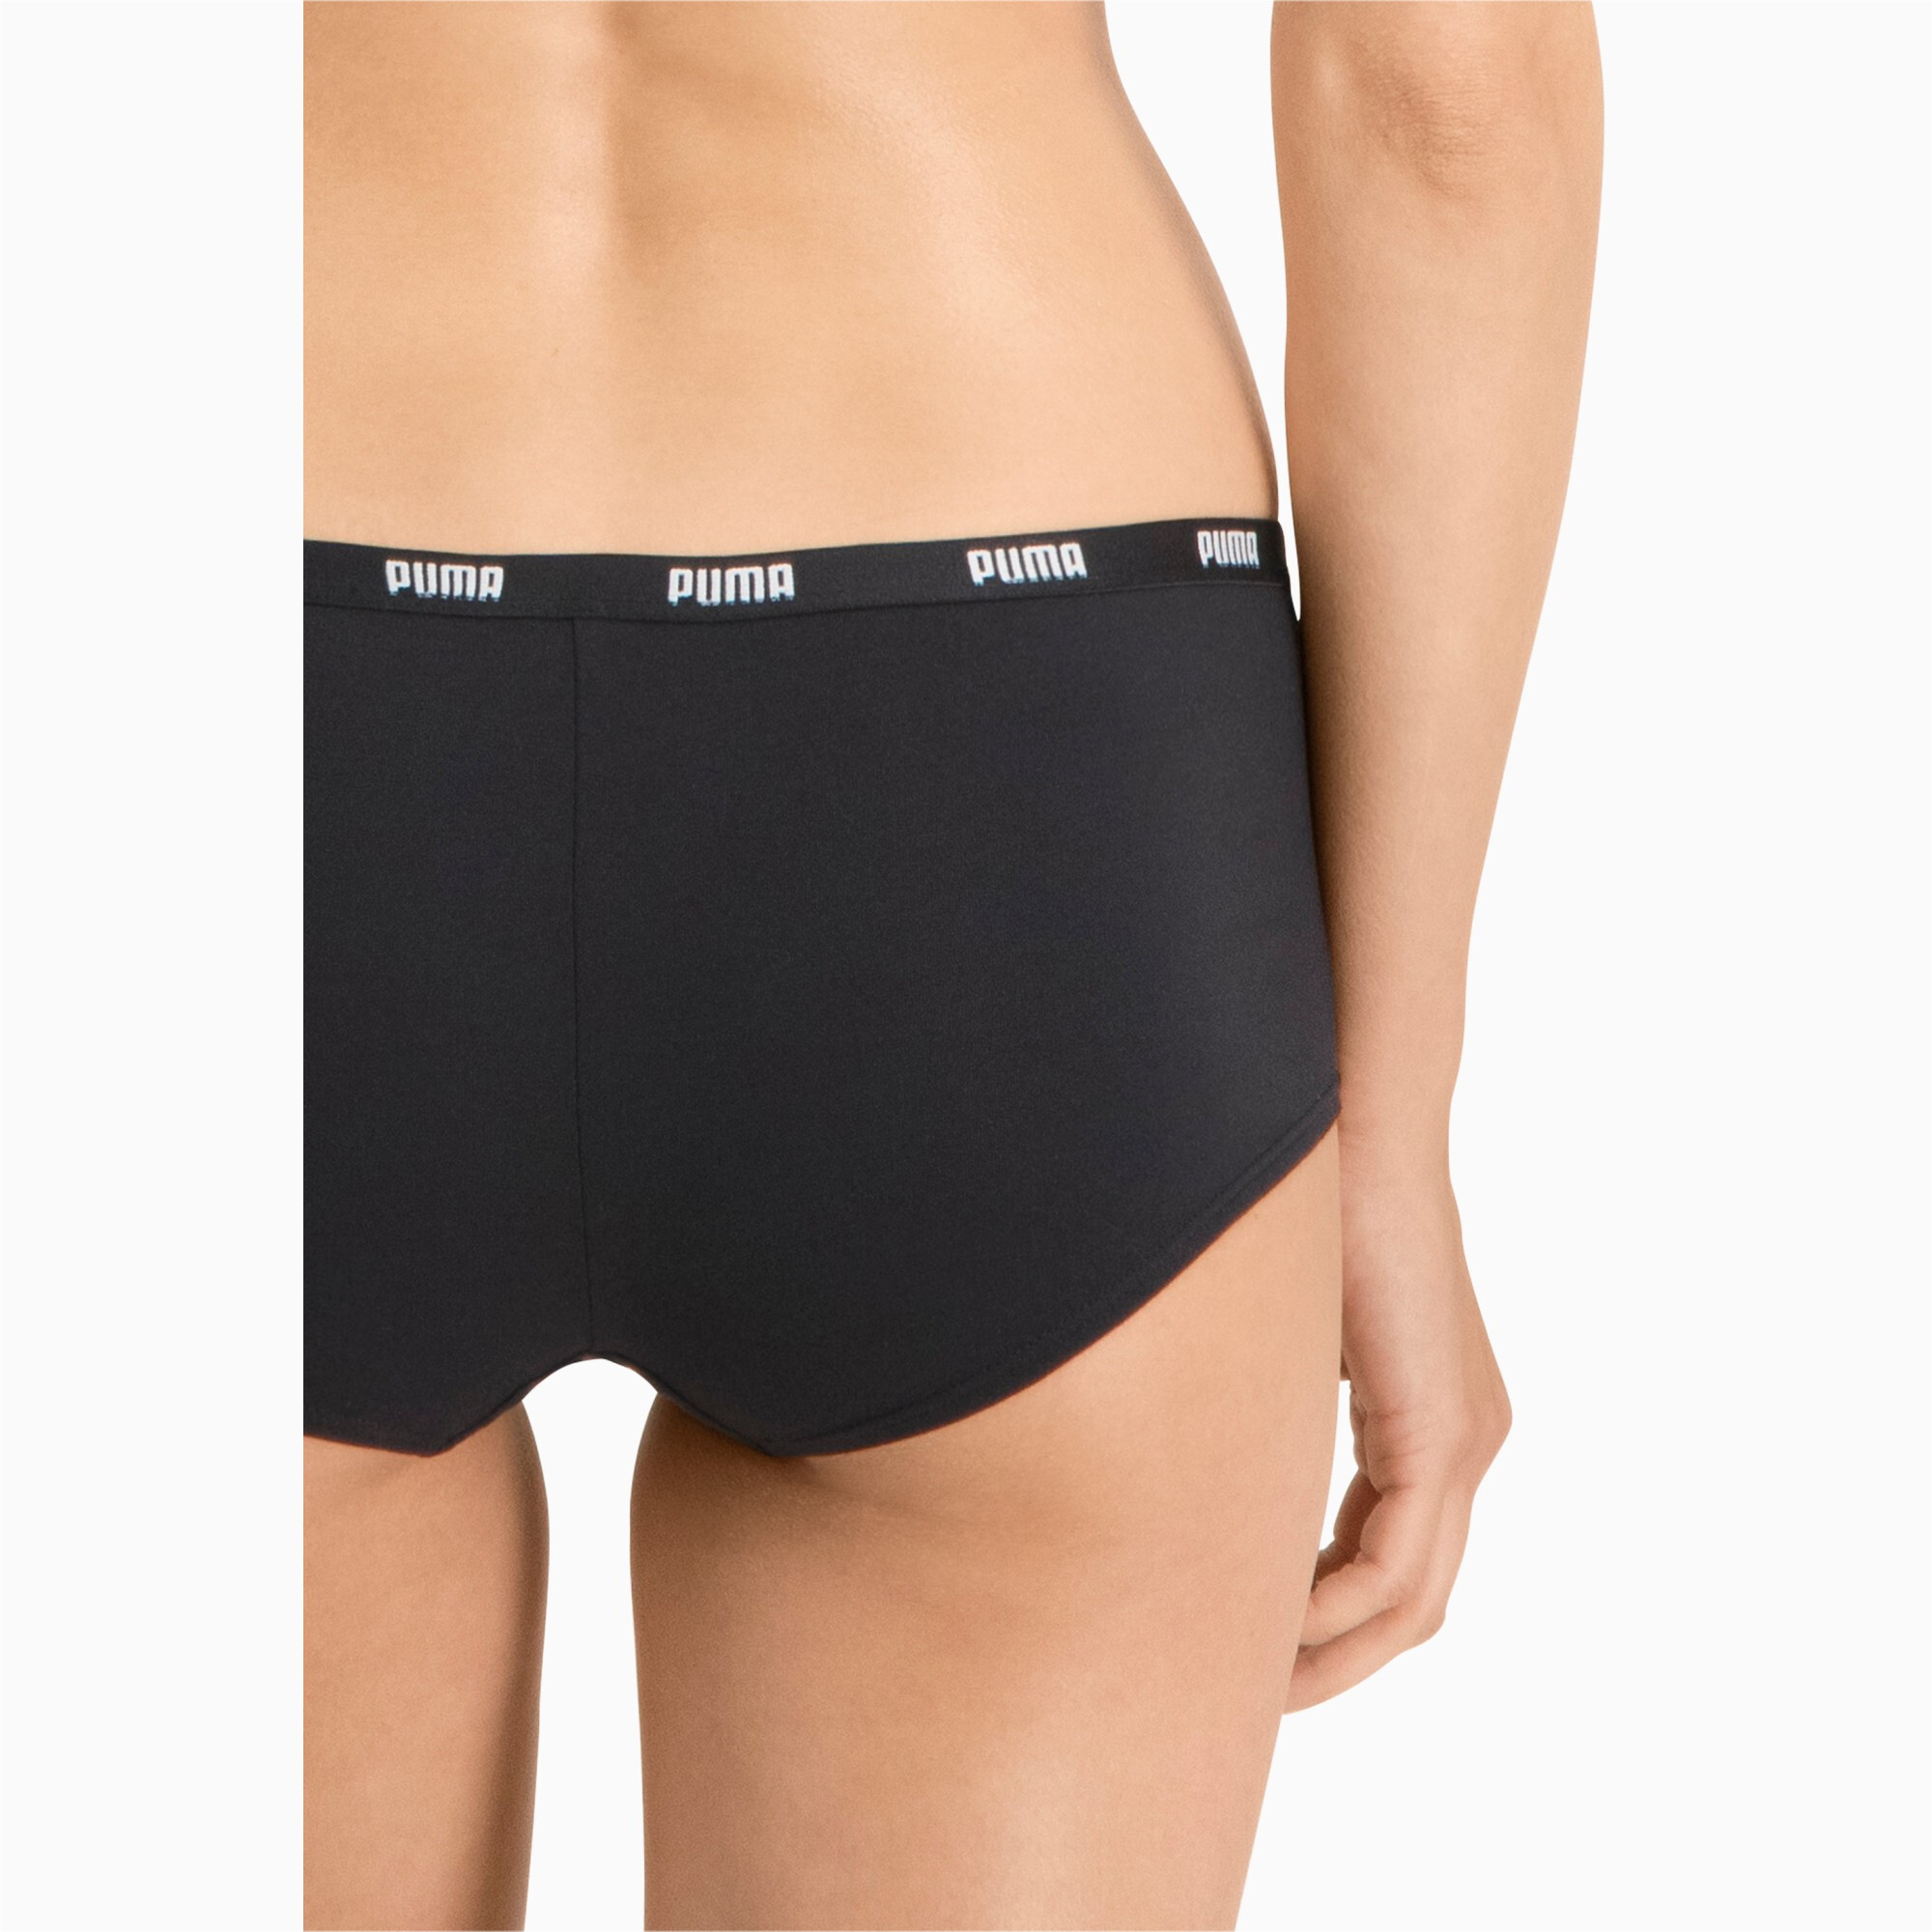 Women's Puma Mini Short's Underwear 3 Pack, Size 4, Clothing